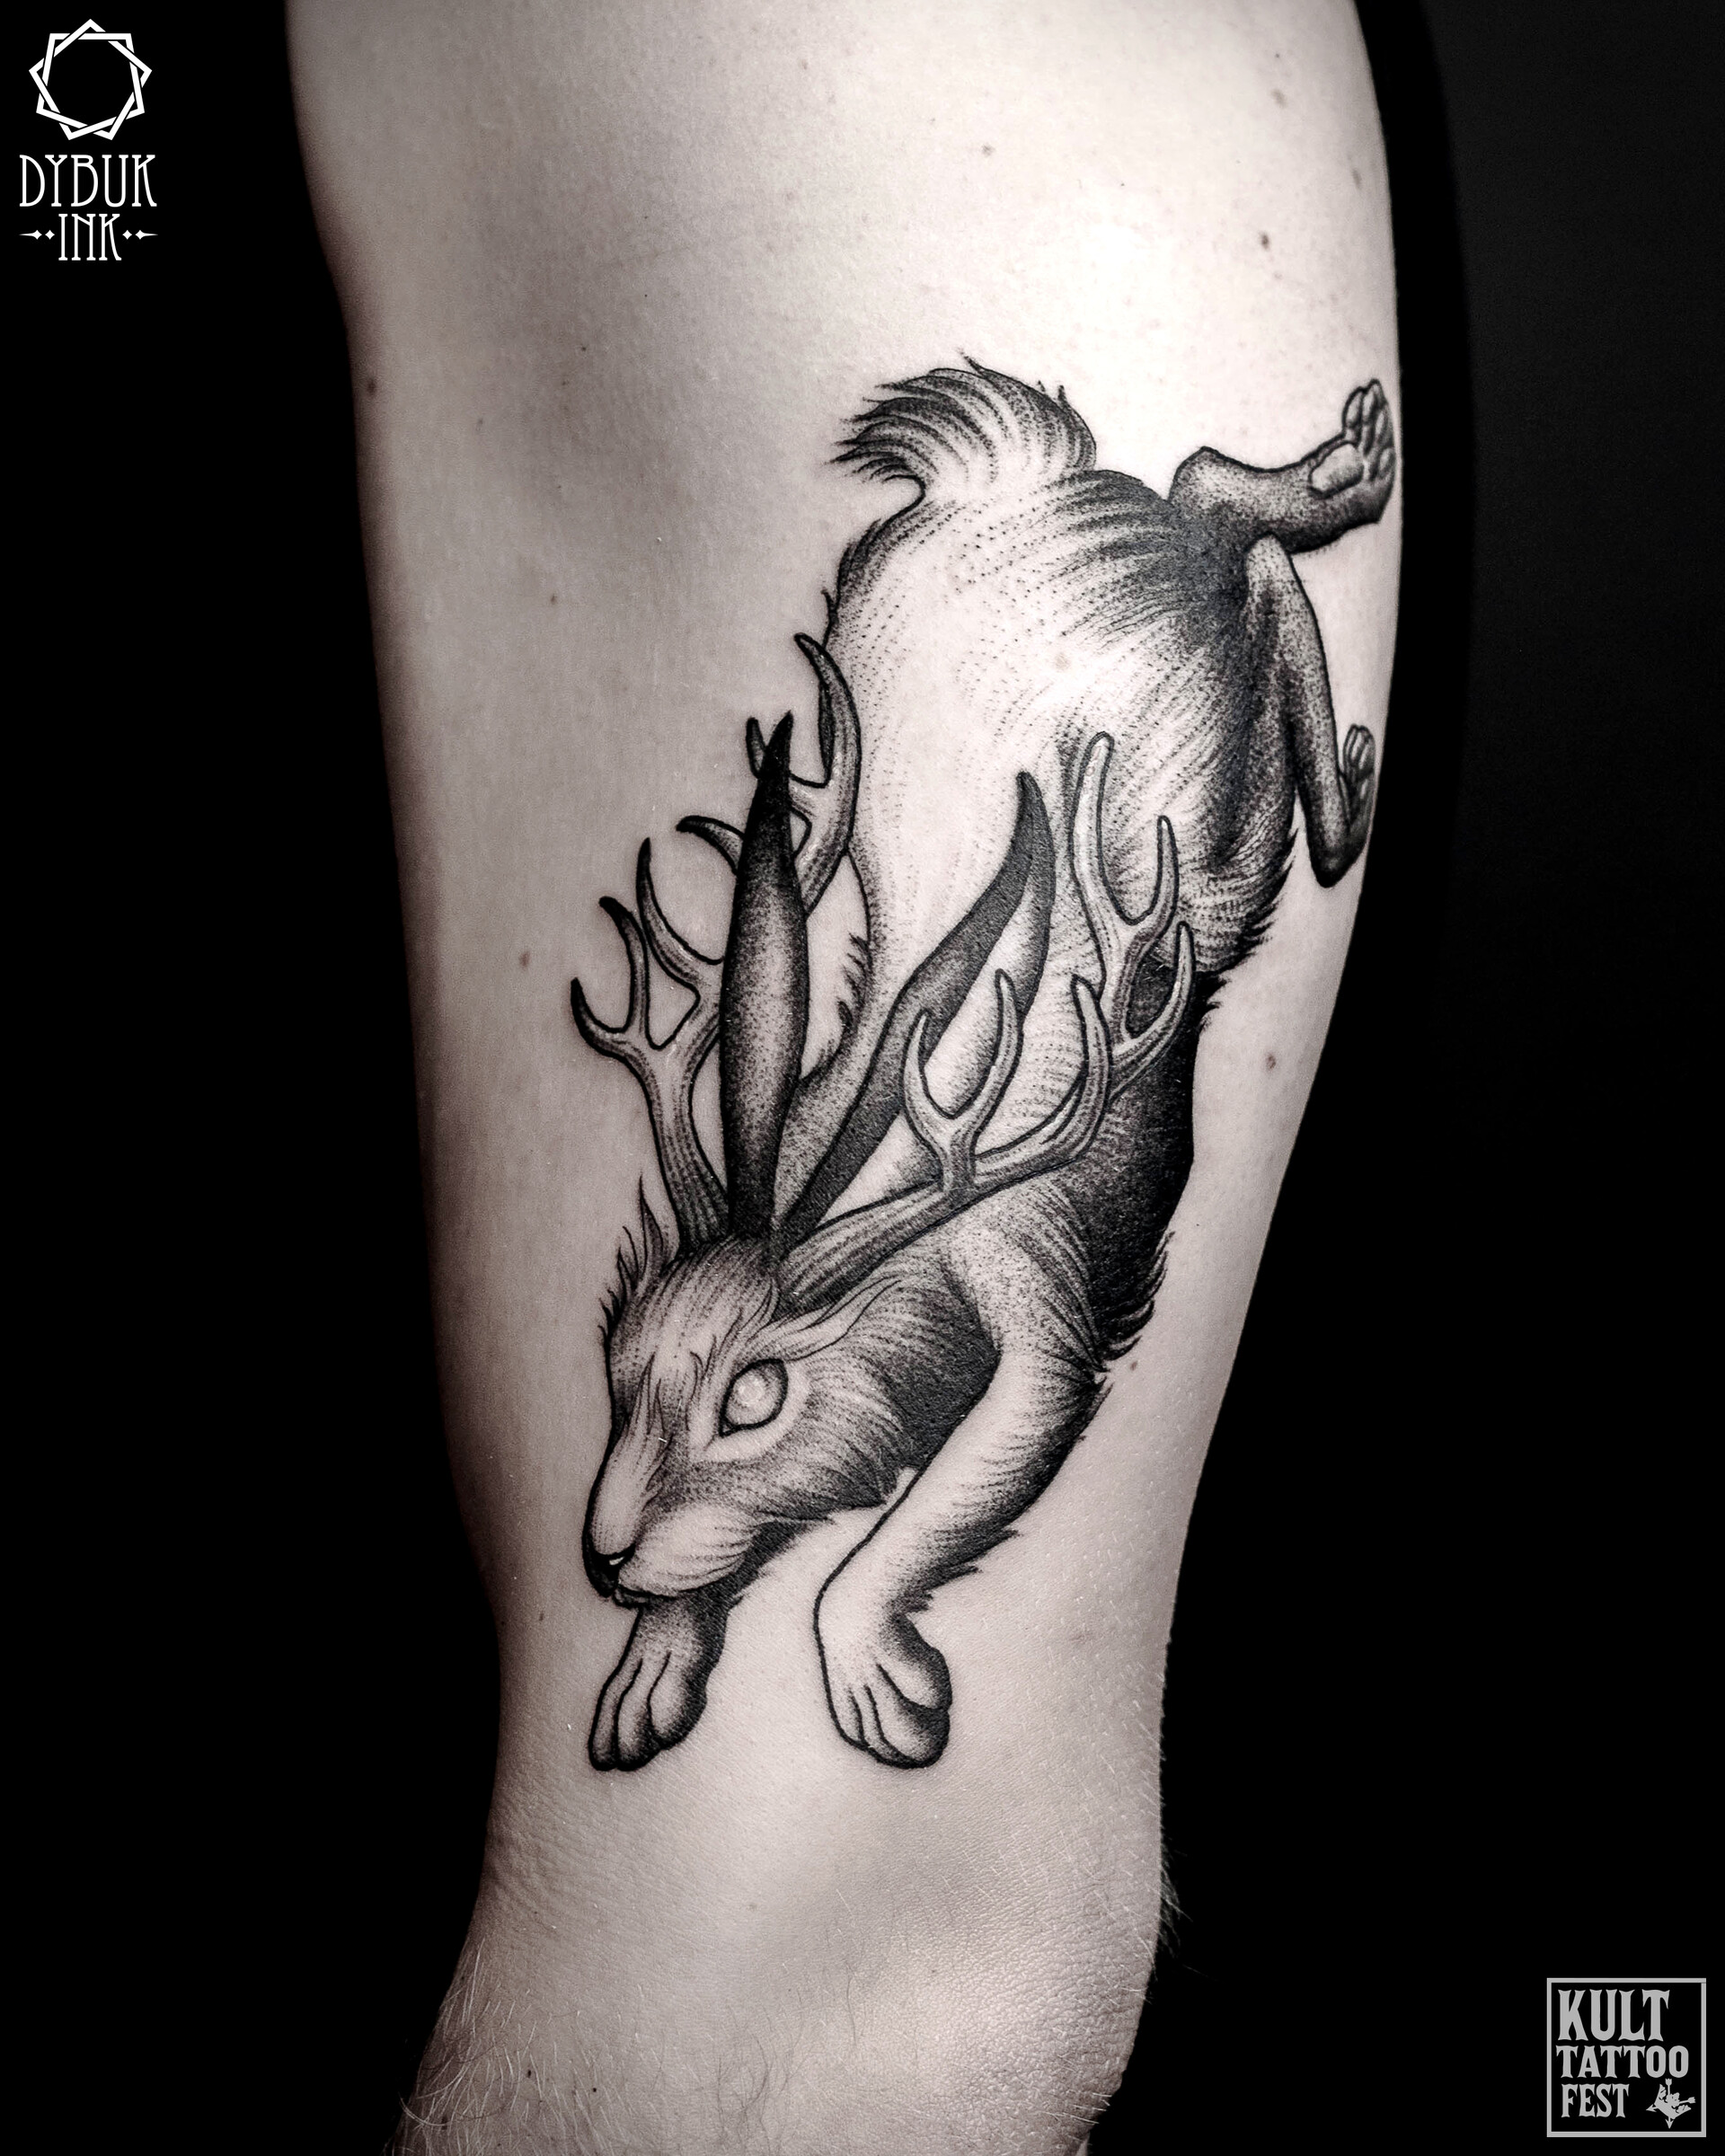 Tattoo uploaded by Xavier • Jackalope tattoo by Kyle Stacher. #KyleStacher # jackalope #fable #imaginary #animal #antler #rabbit • Tattoodo